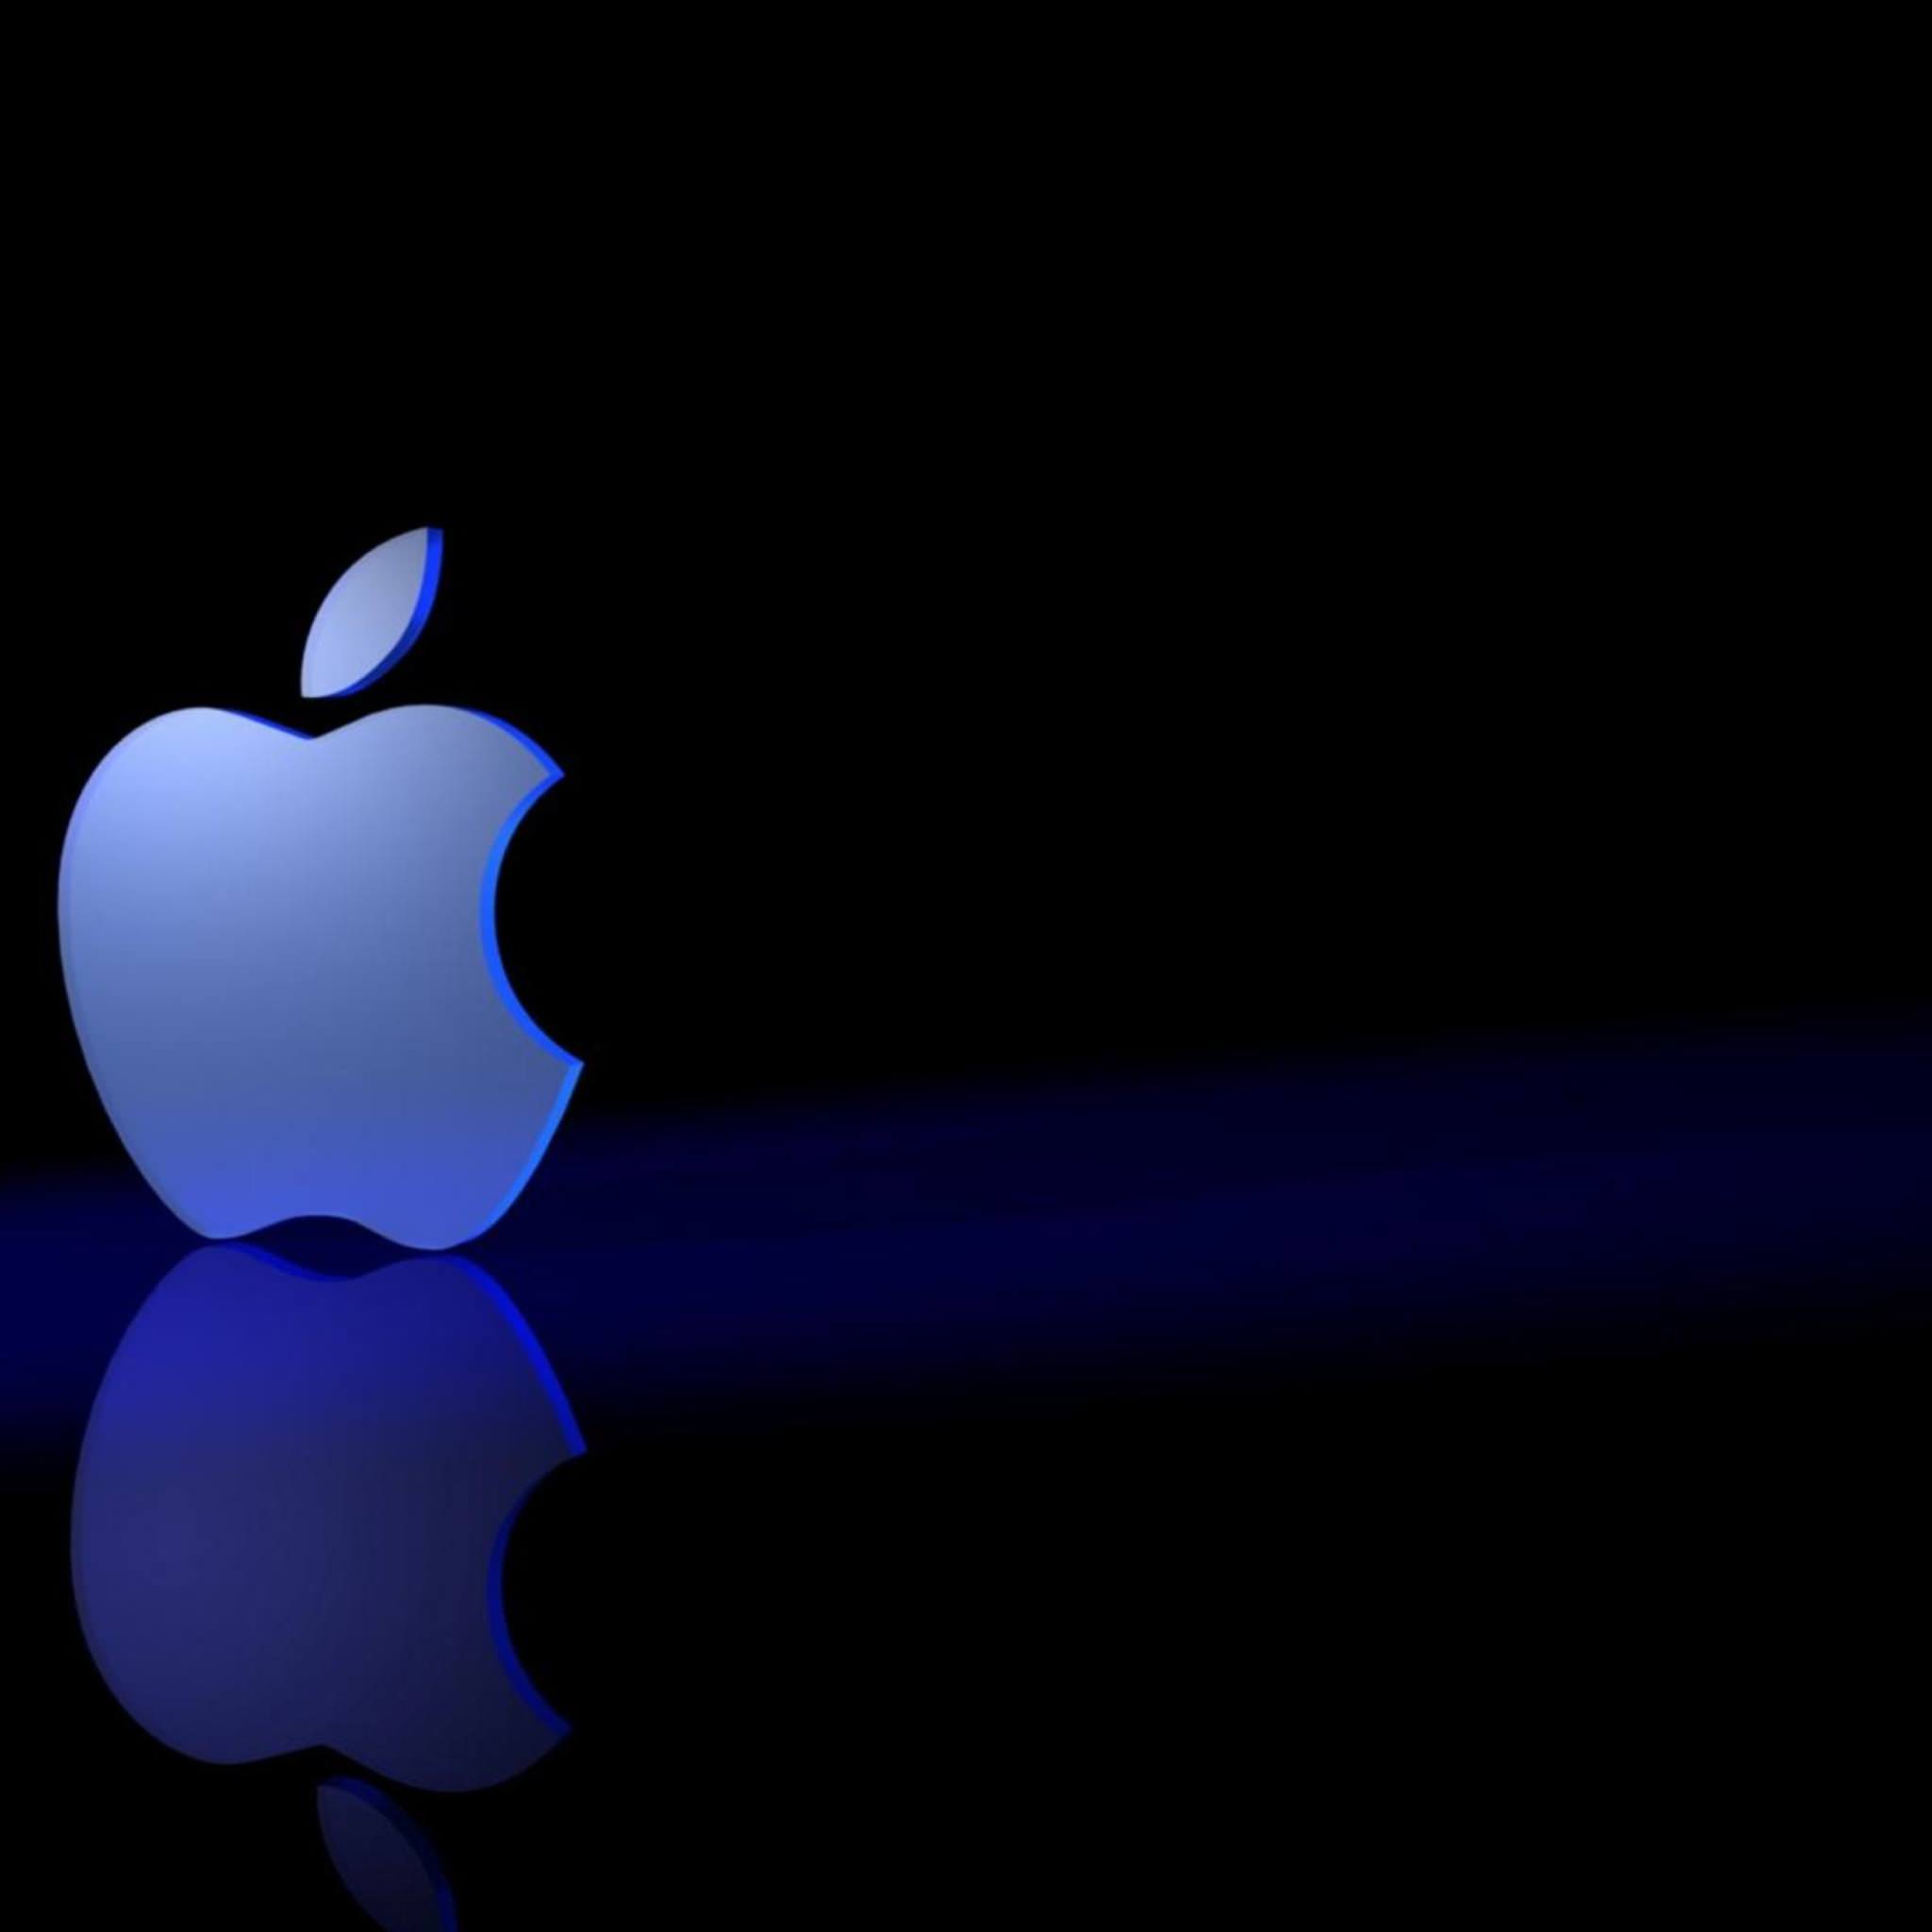 Apple logo colorful | wallpaper.sc iPad